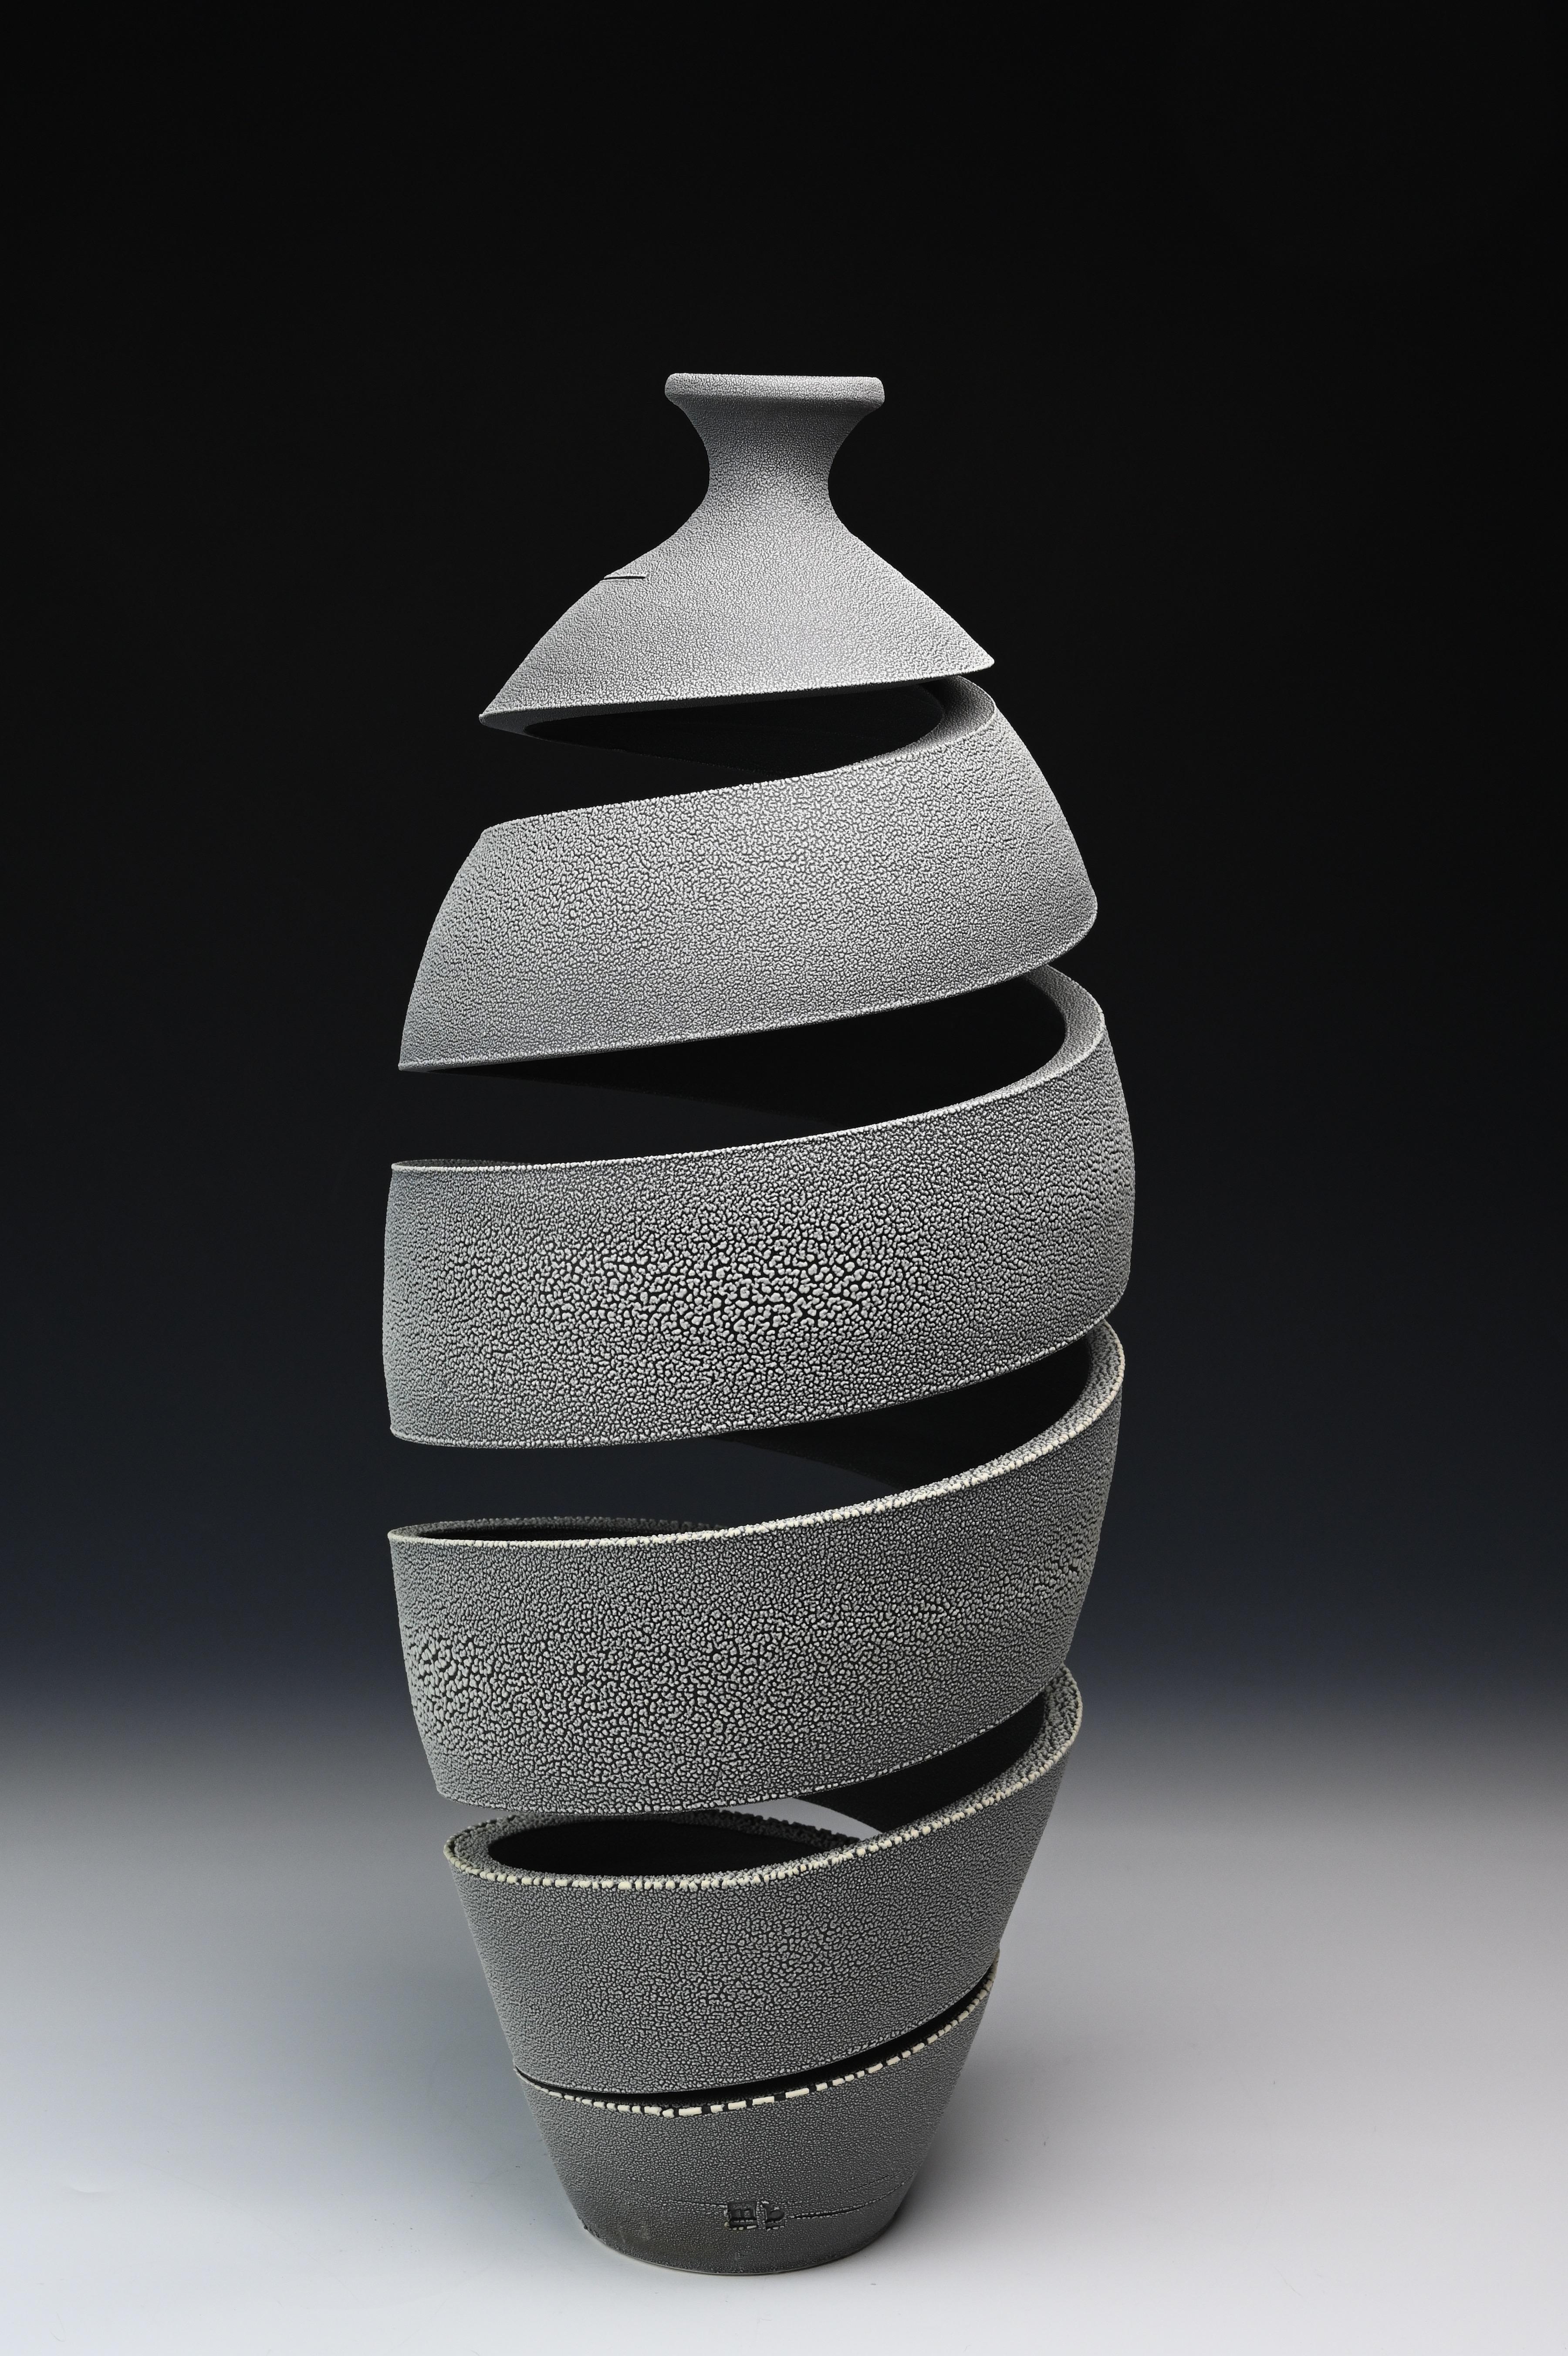 Spatial Spiral: Schnecke – Abstrakte spiralförmige Keramikskulptur